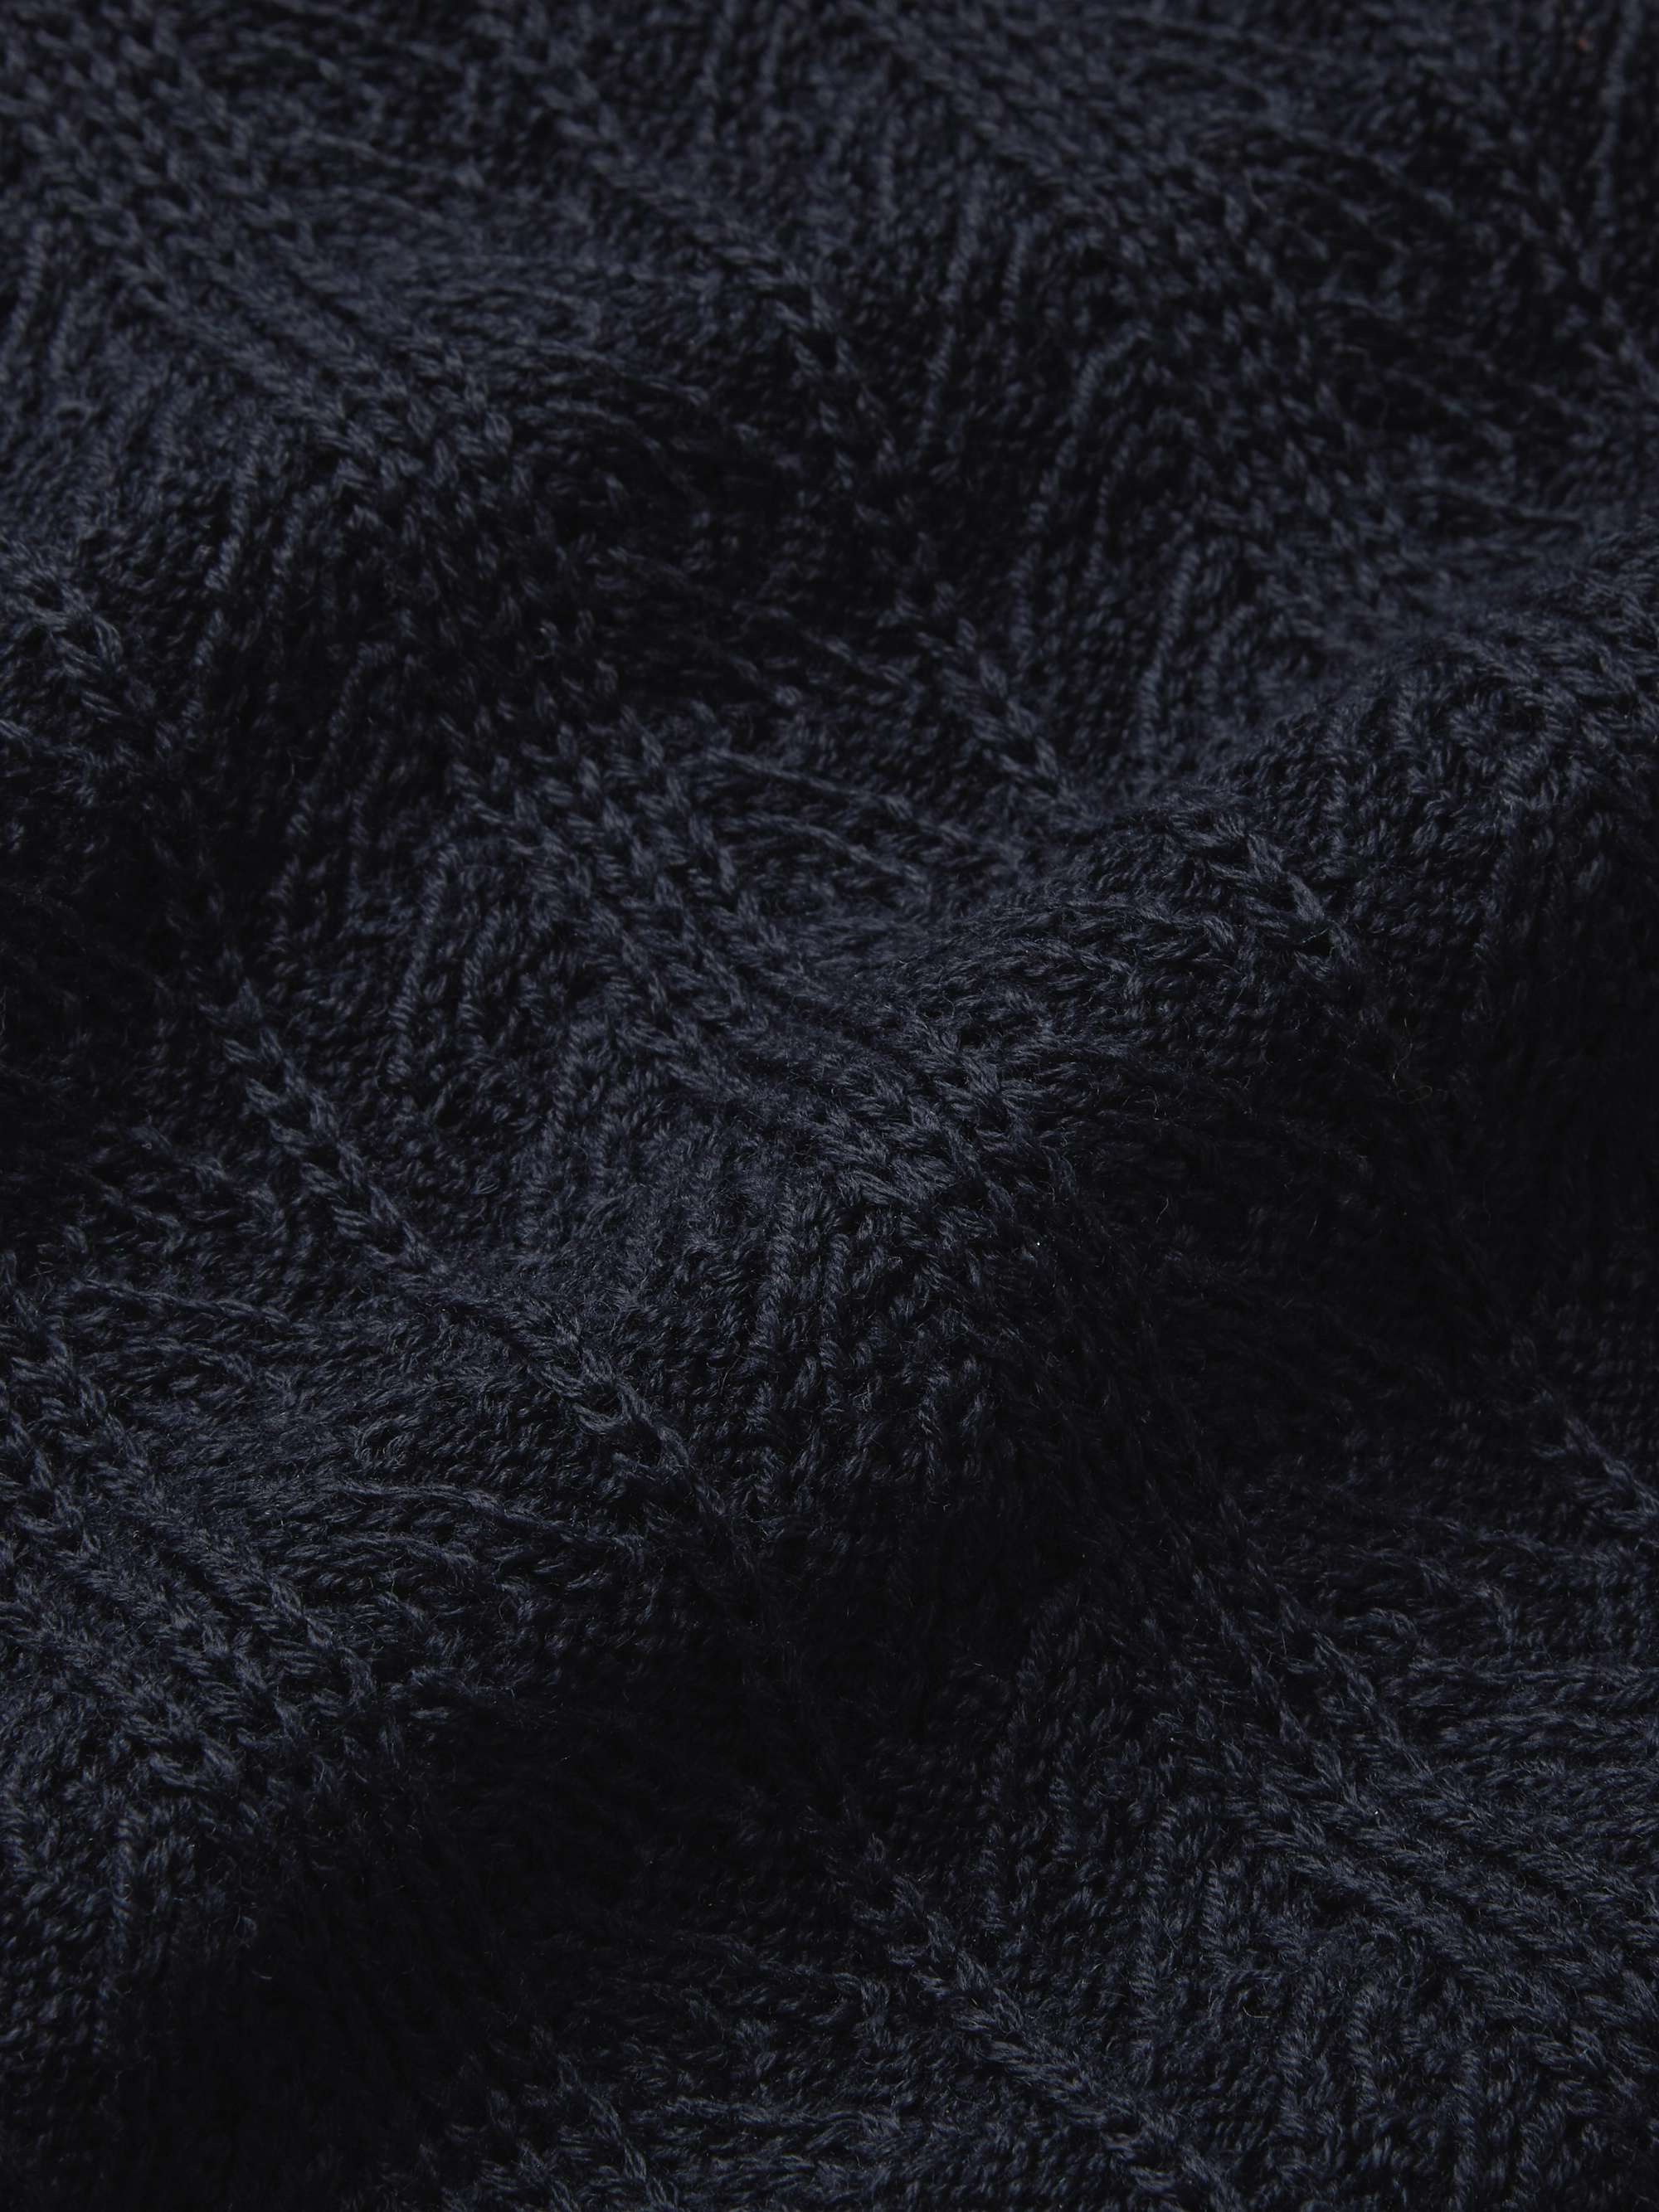 SÉFR Rufus Cable-Knit Merino Wool-Blend Sweater